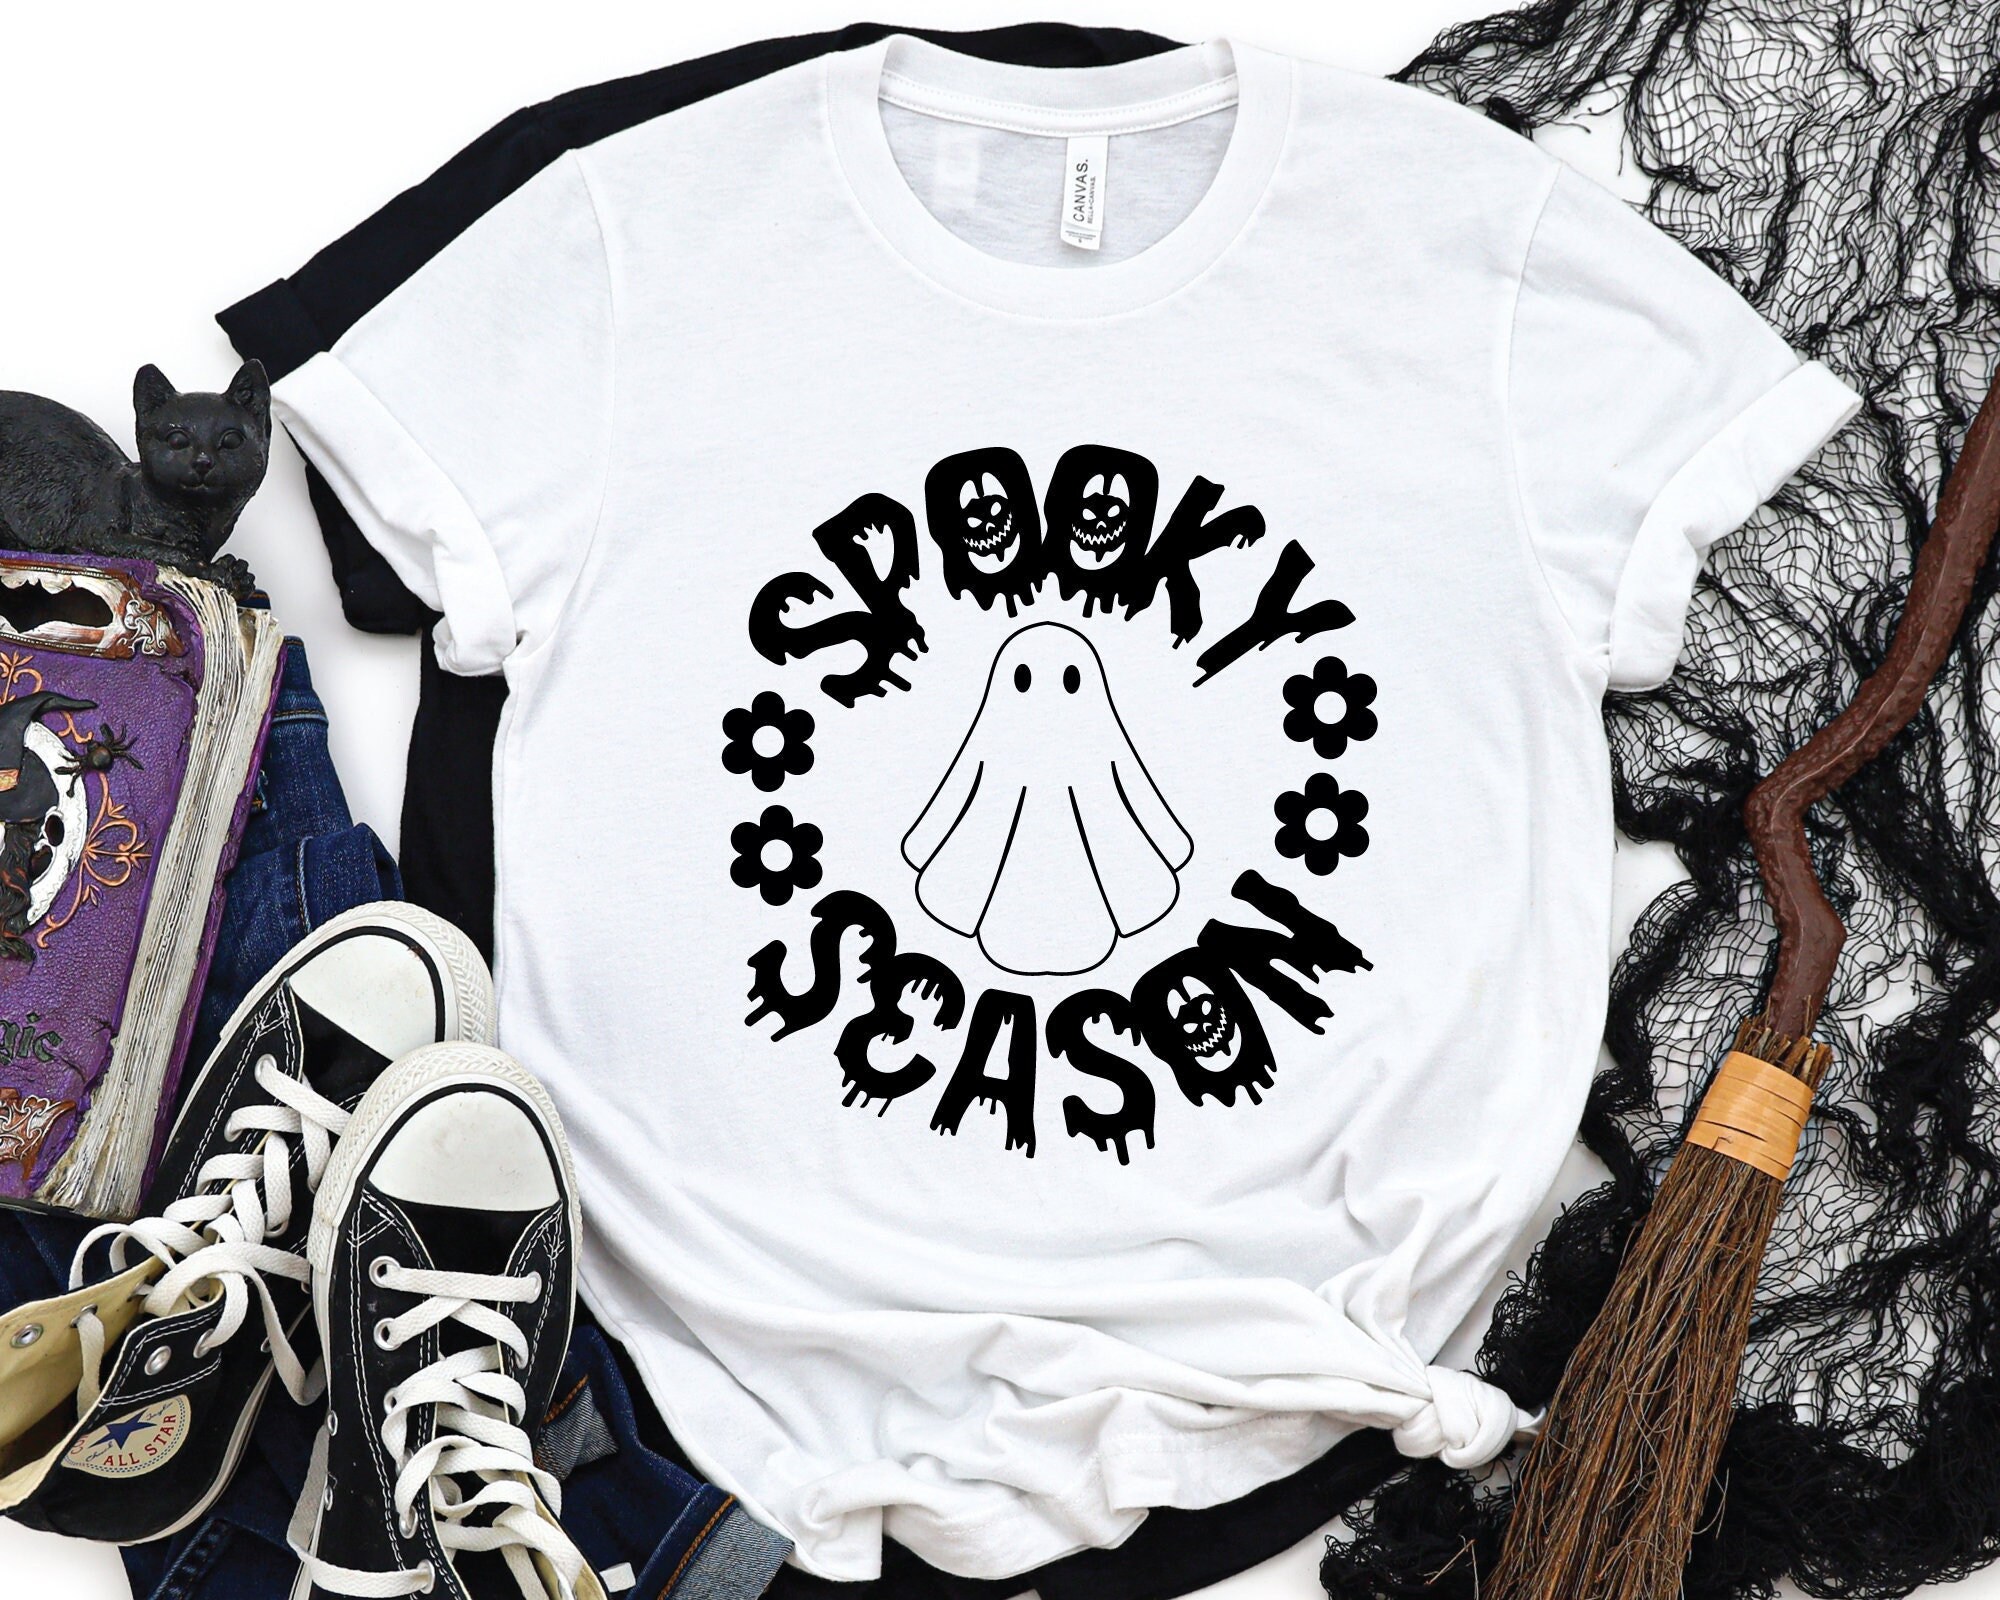 Discover Spooky Season Shirt, Halloween Shirt, Fall Shirt, Spooky Vibes Shirt, Gift For Halloween, Pumpkin Shirt, Ghost Shirt